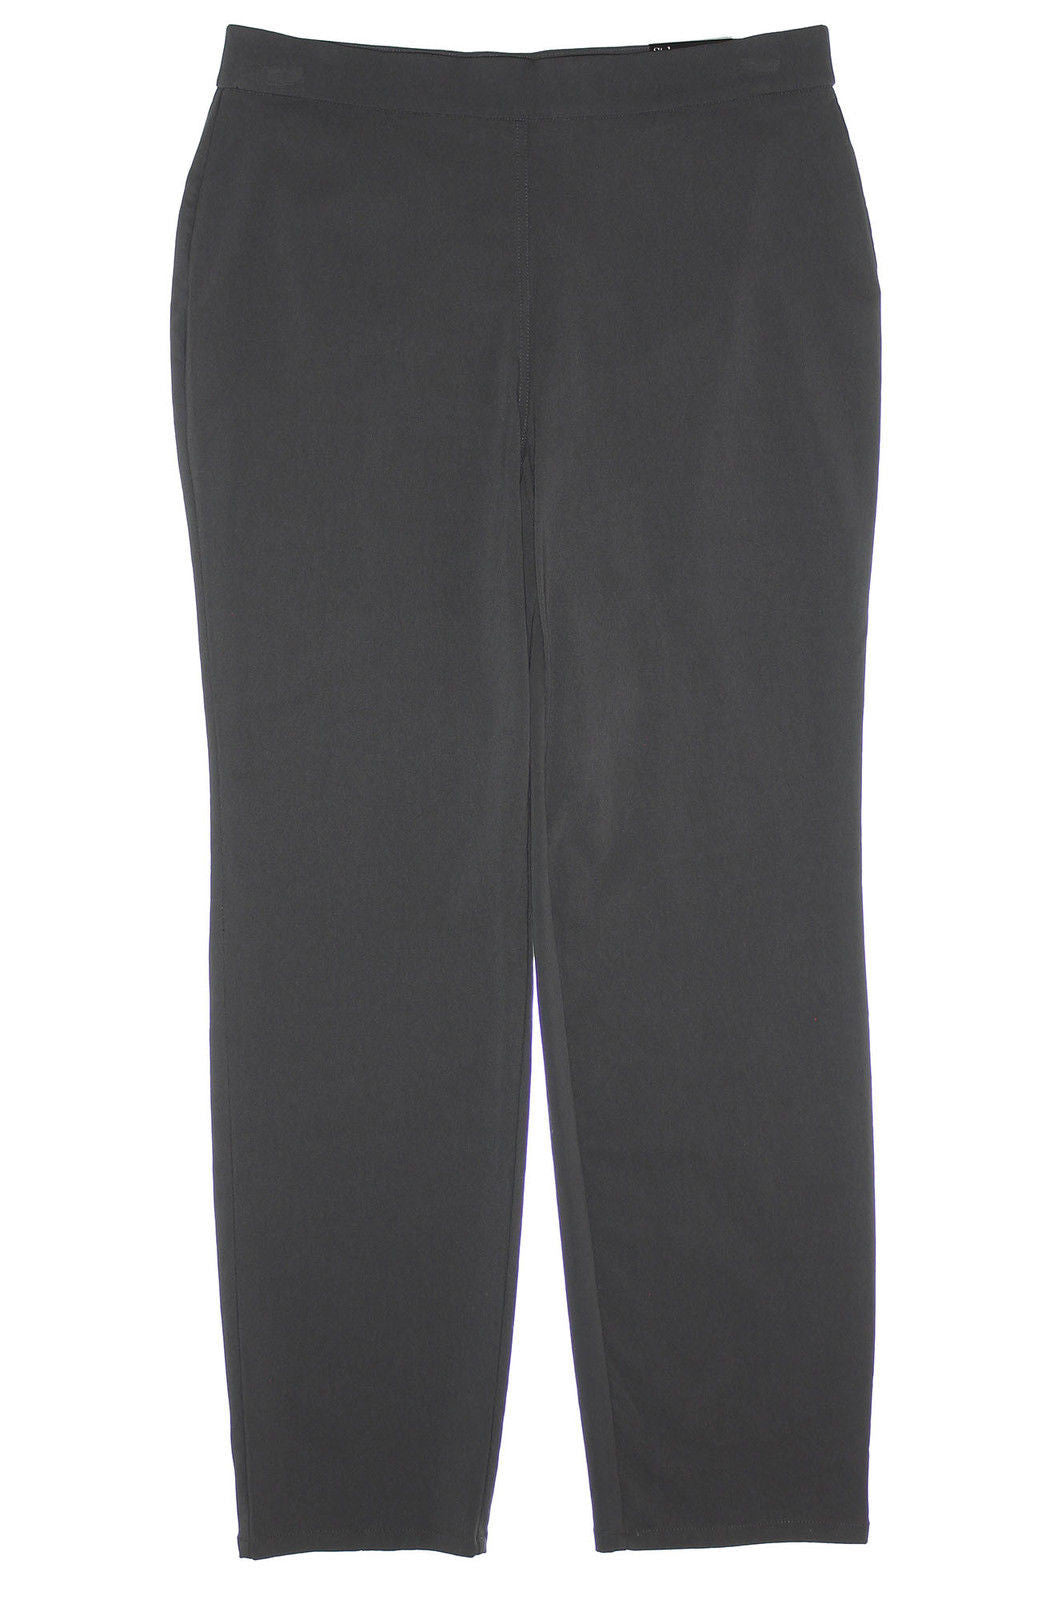 Style & Co Grey Tummy Control Pull On Elastic Waist Pants